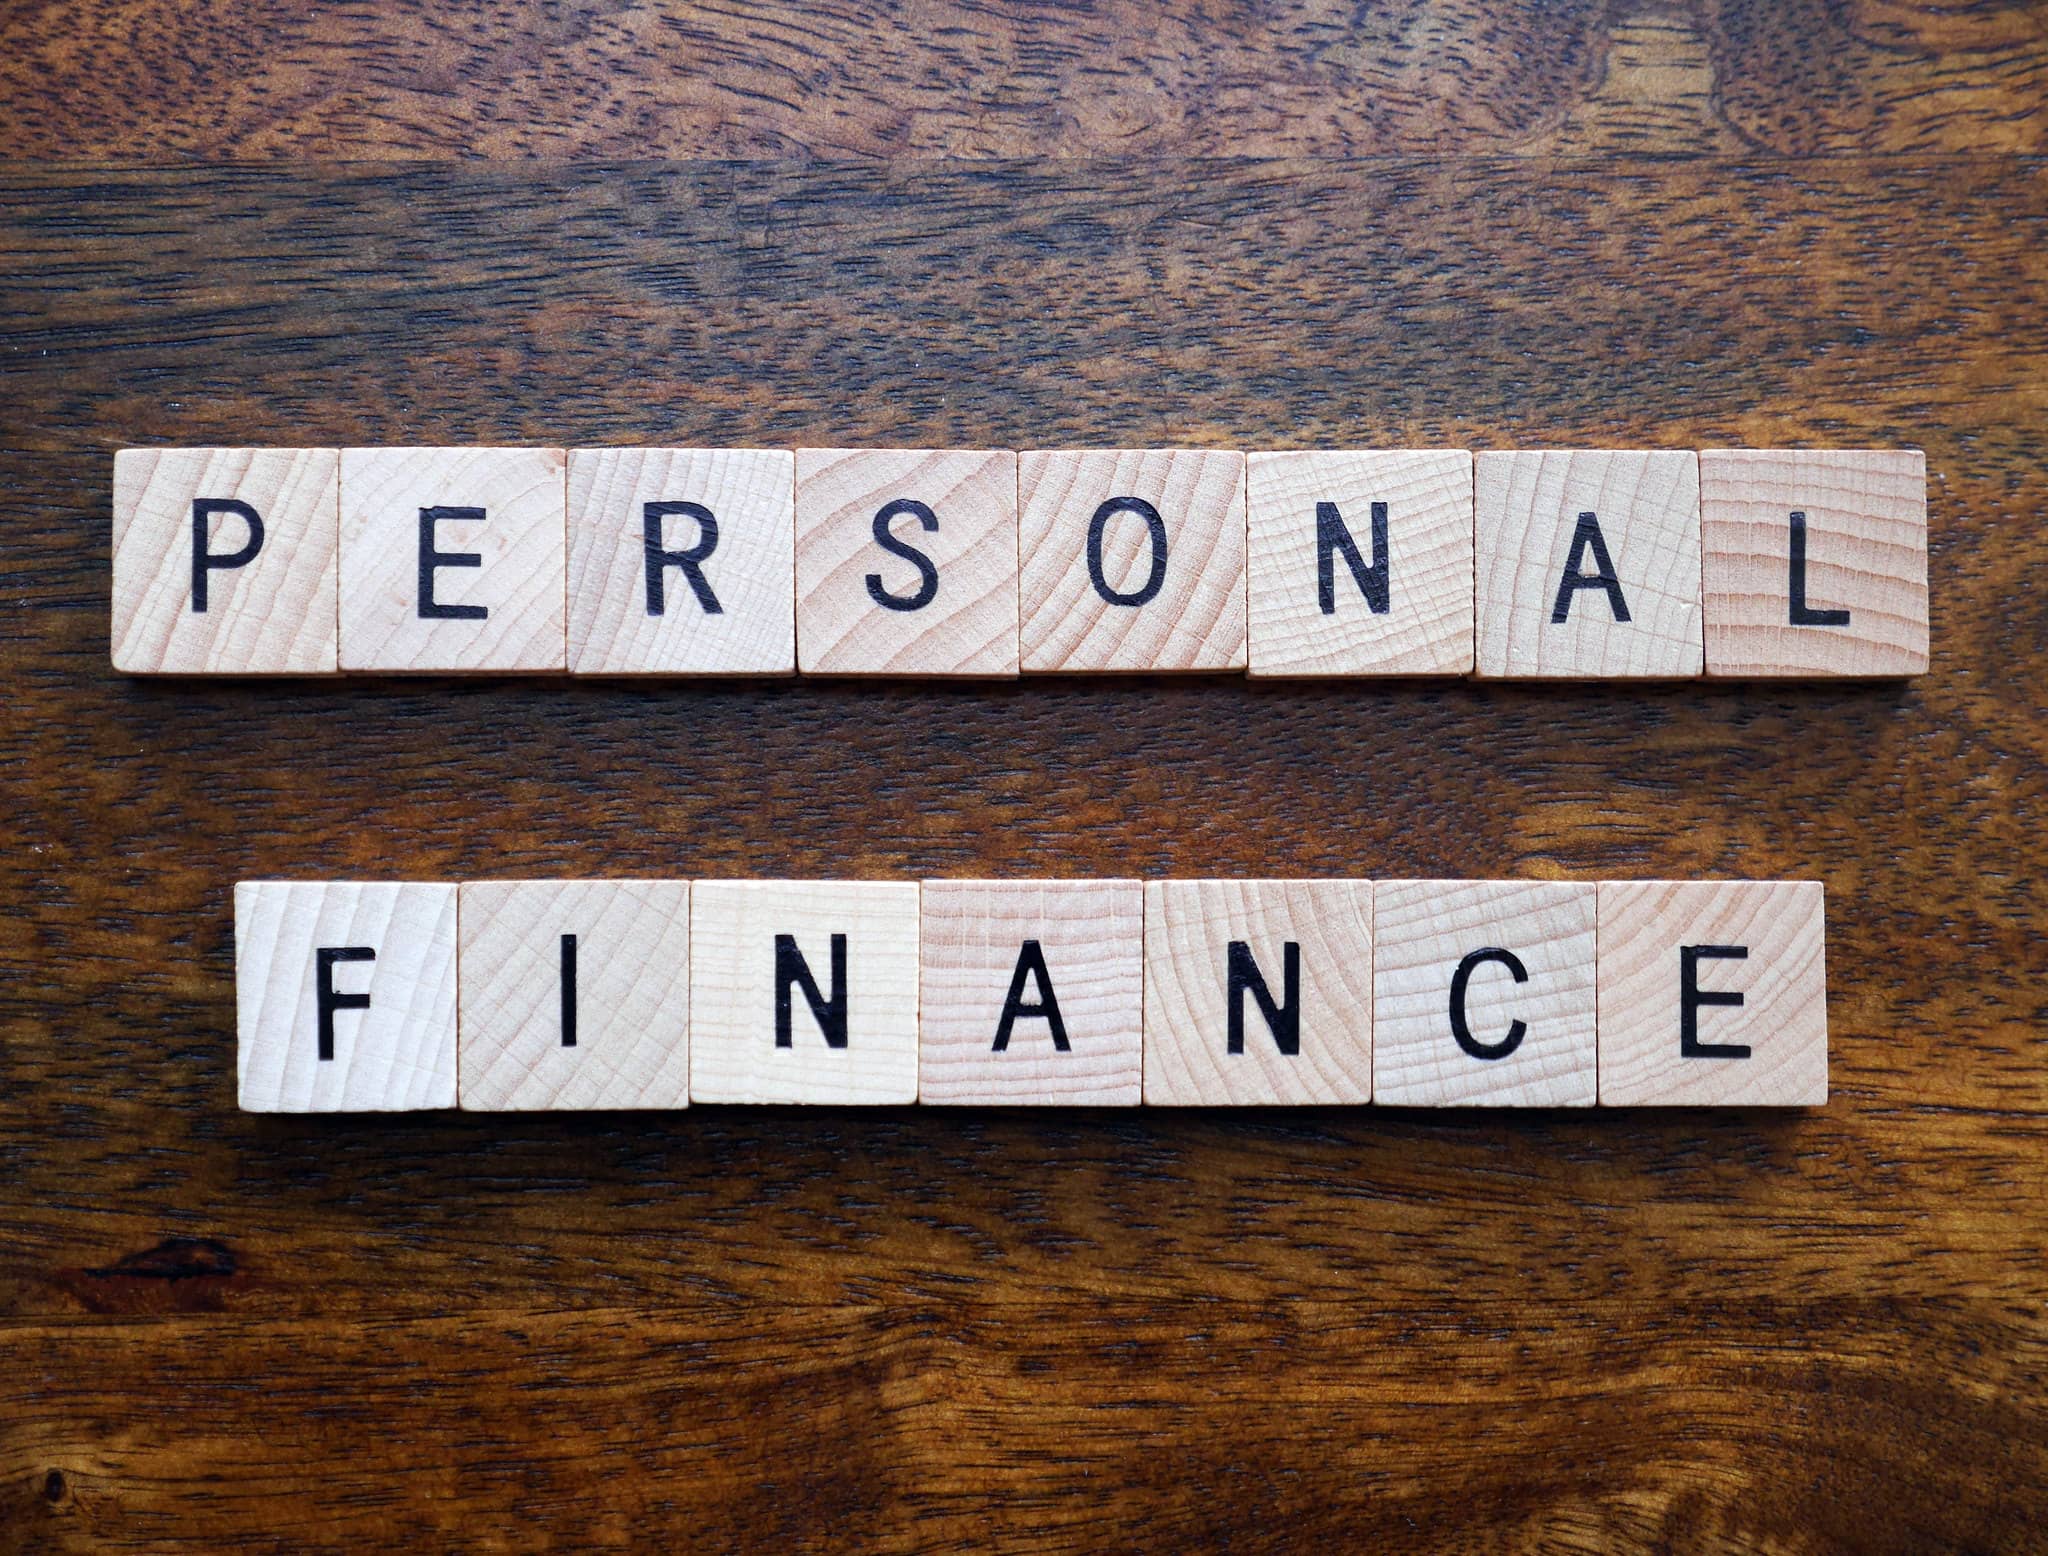 mac personal finance app